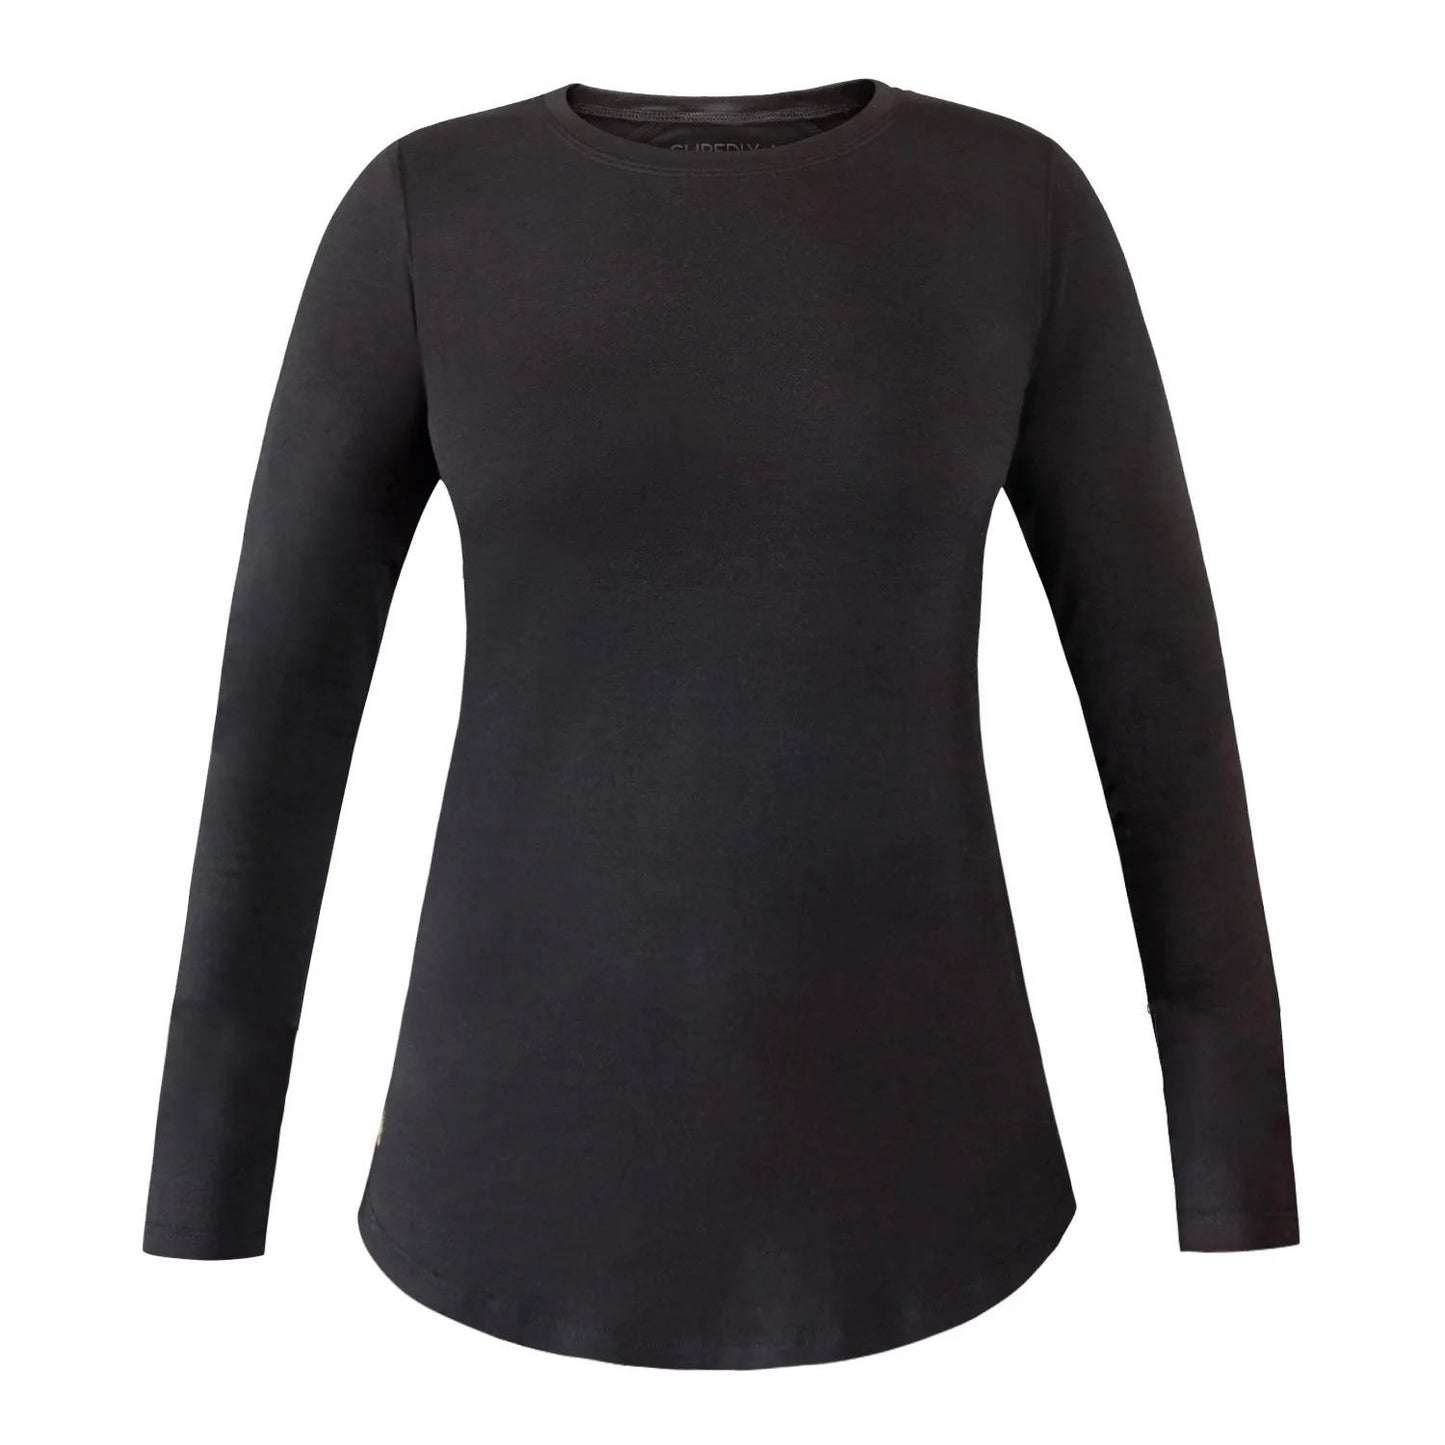 Shredly Women's Long Sleeve Black LS Shirts